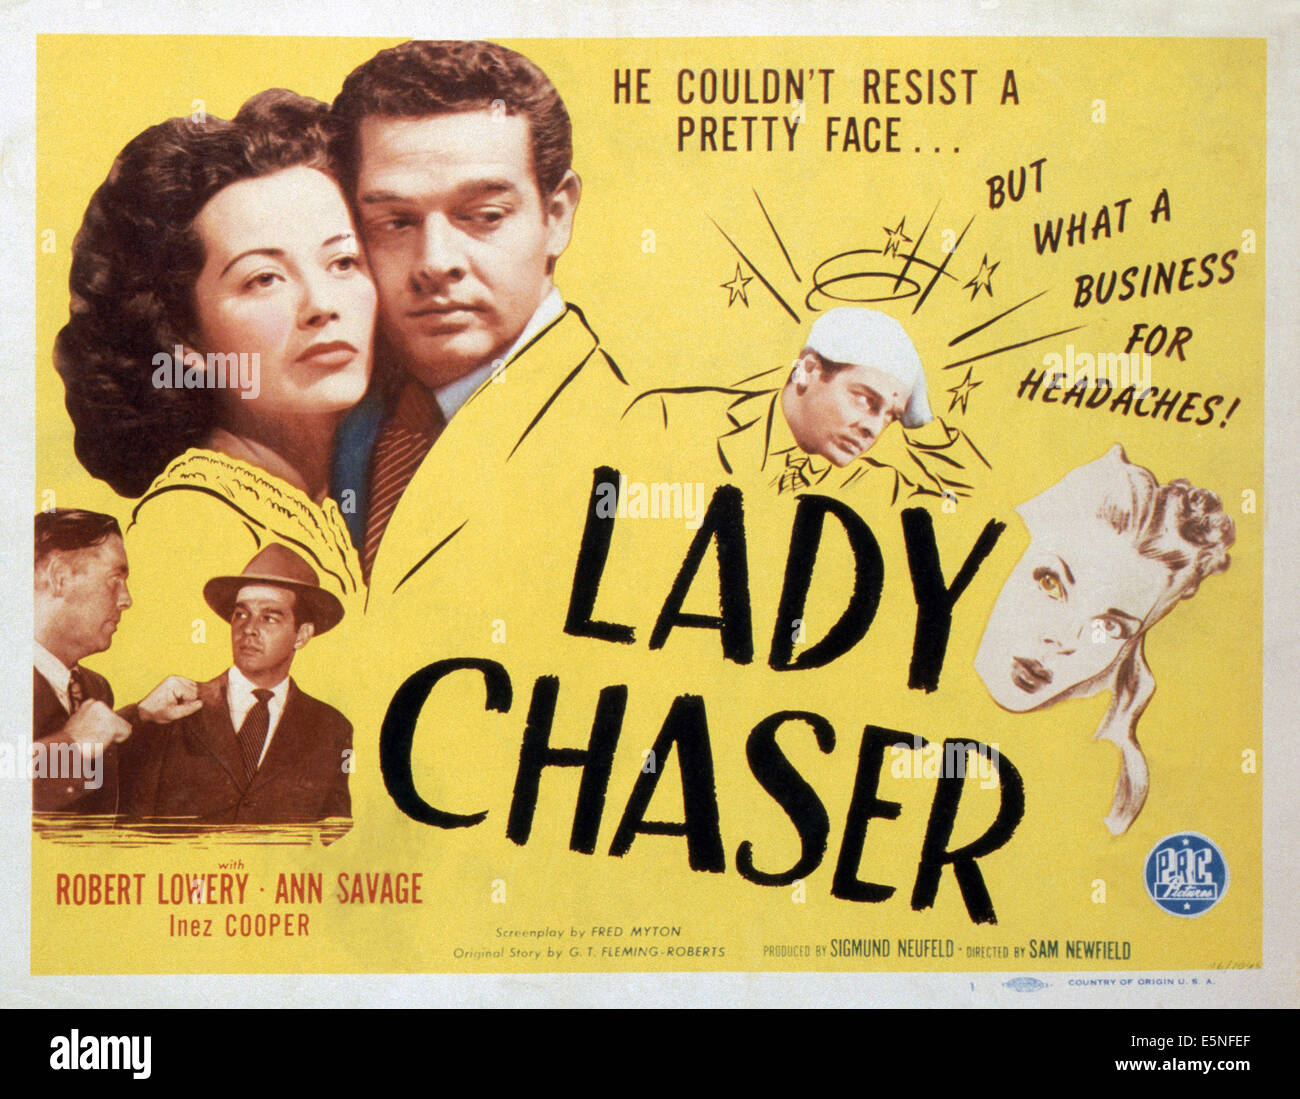 LADY CHASER, top left: Inez Cooper, Robert Lowery, 1946 Stock Photo